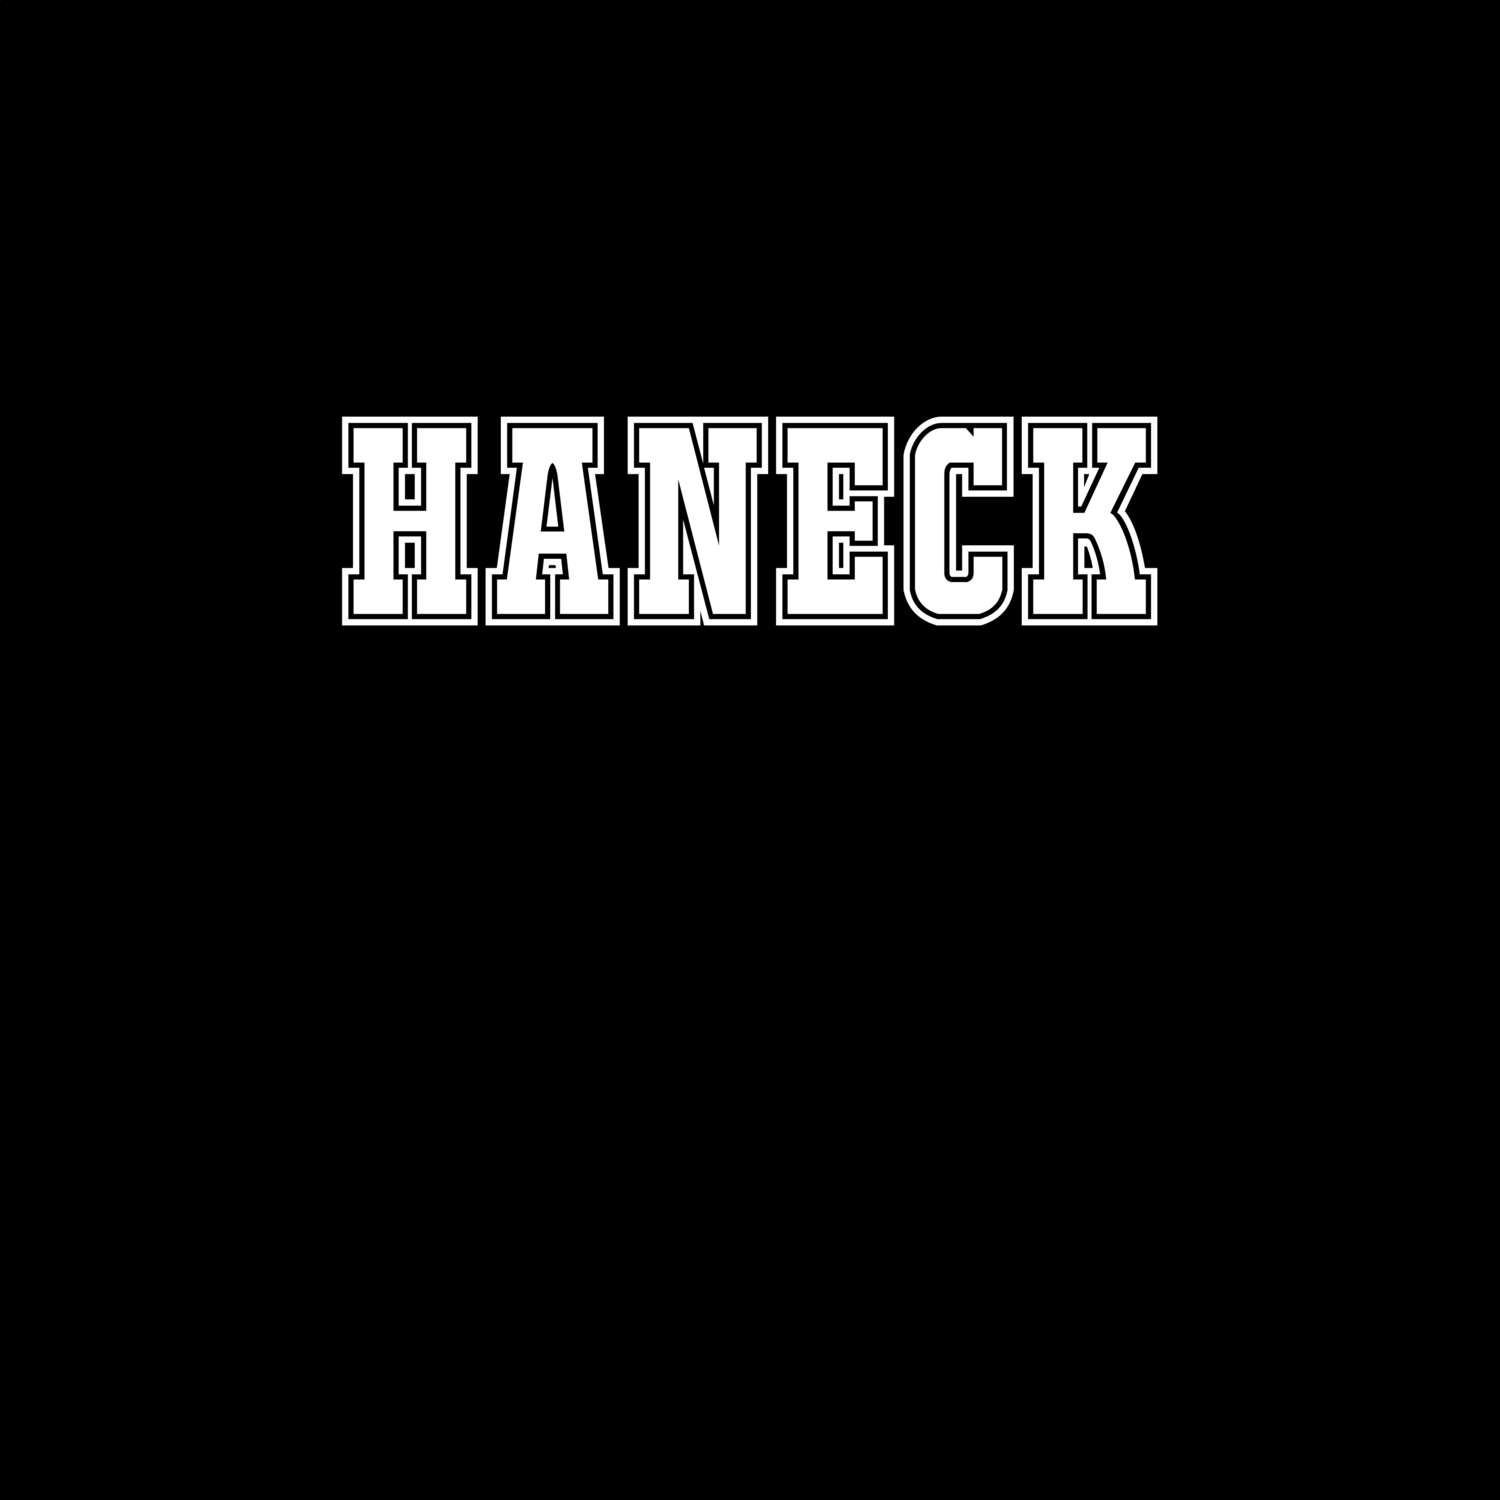 Haneck T-Shirt »Classic«